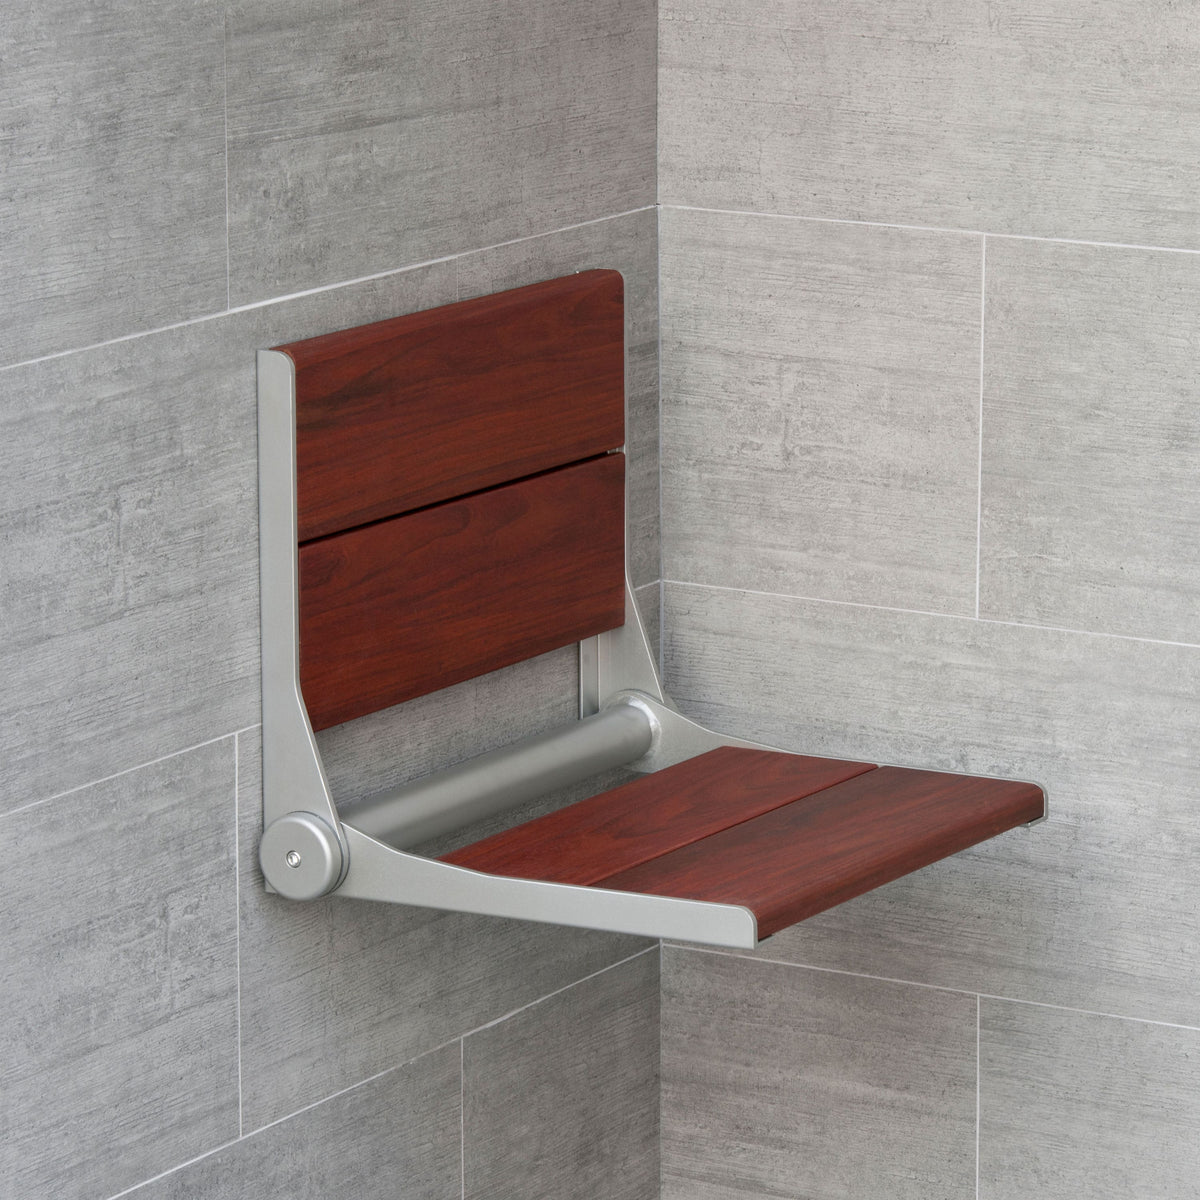 ThermaSol Shower Seat, Folding